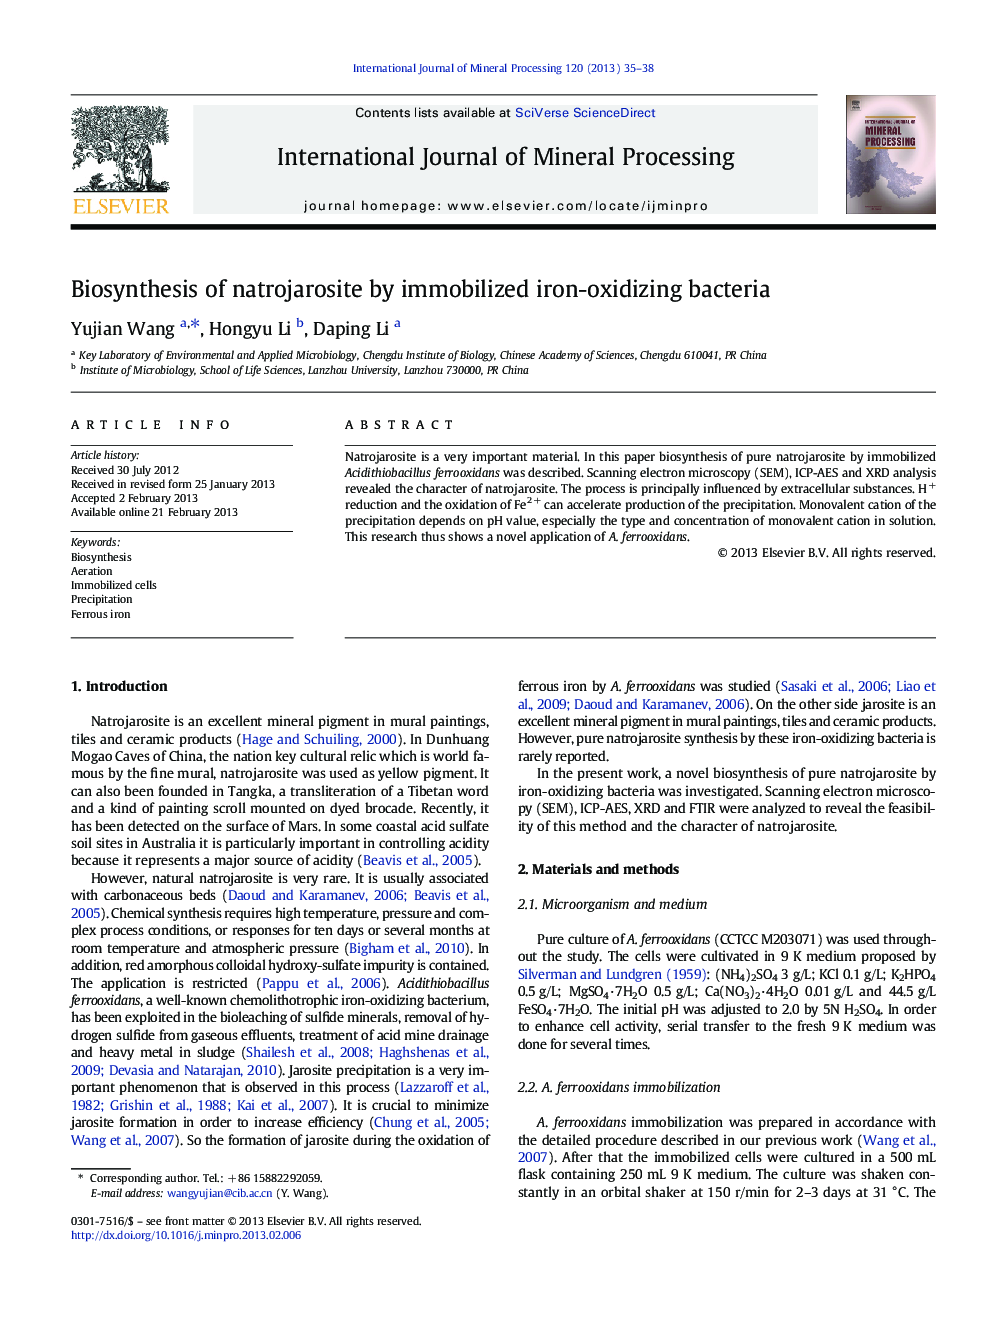 Biosynthesis of natrojarosite by immobilized iron-oxidizing bacteria